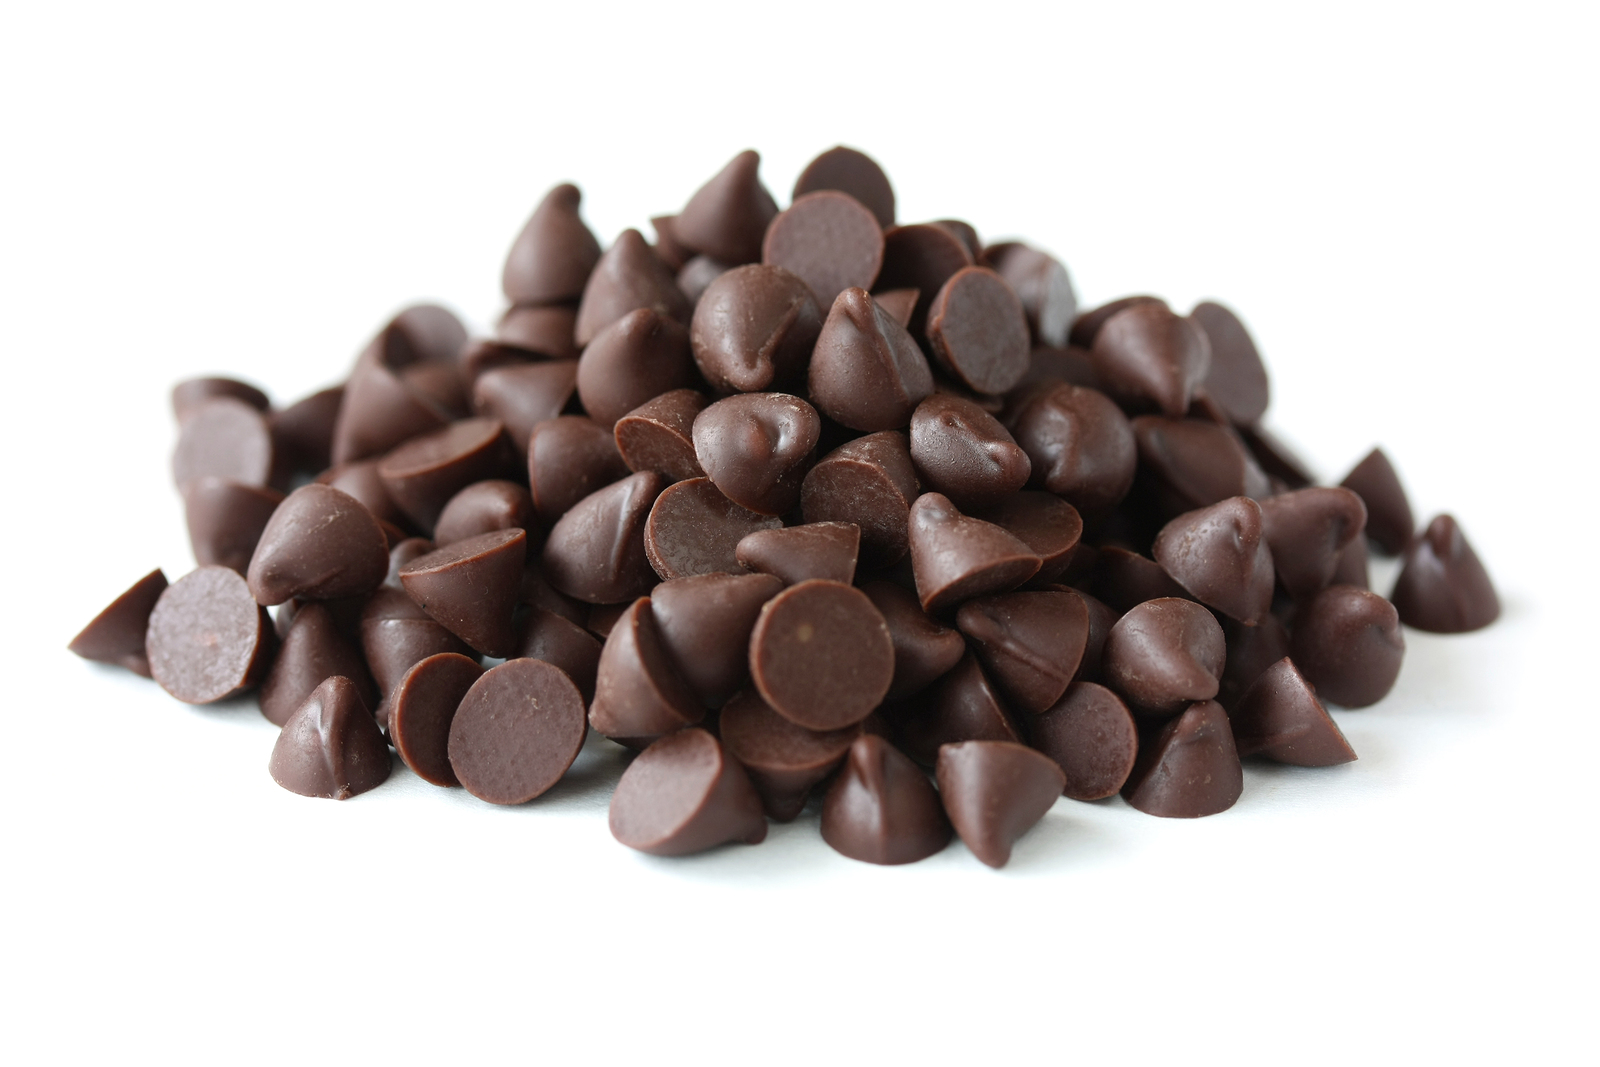 bigstock-chocolate-chips-on-white-backg-26006918.jpg